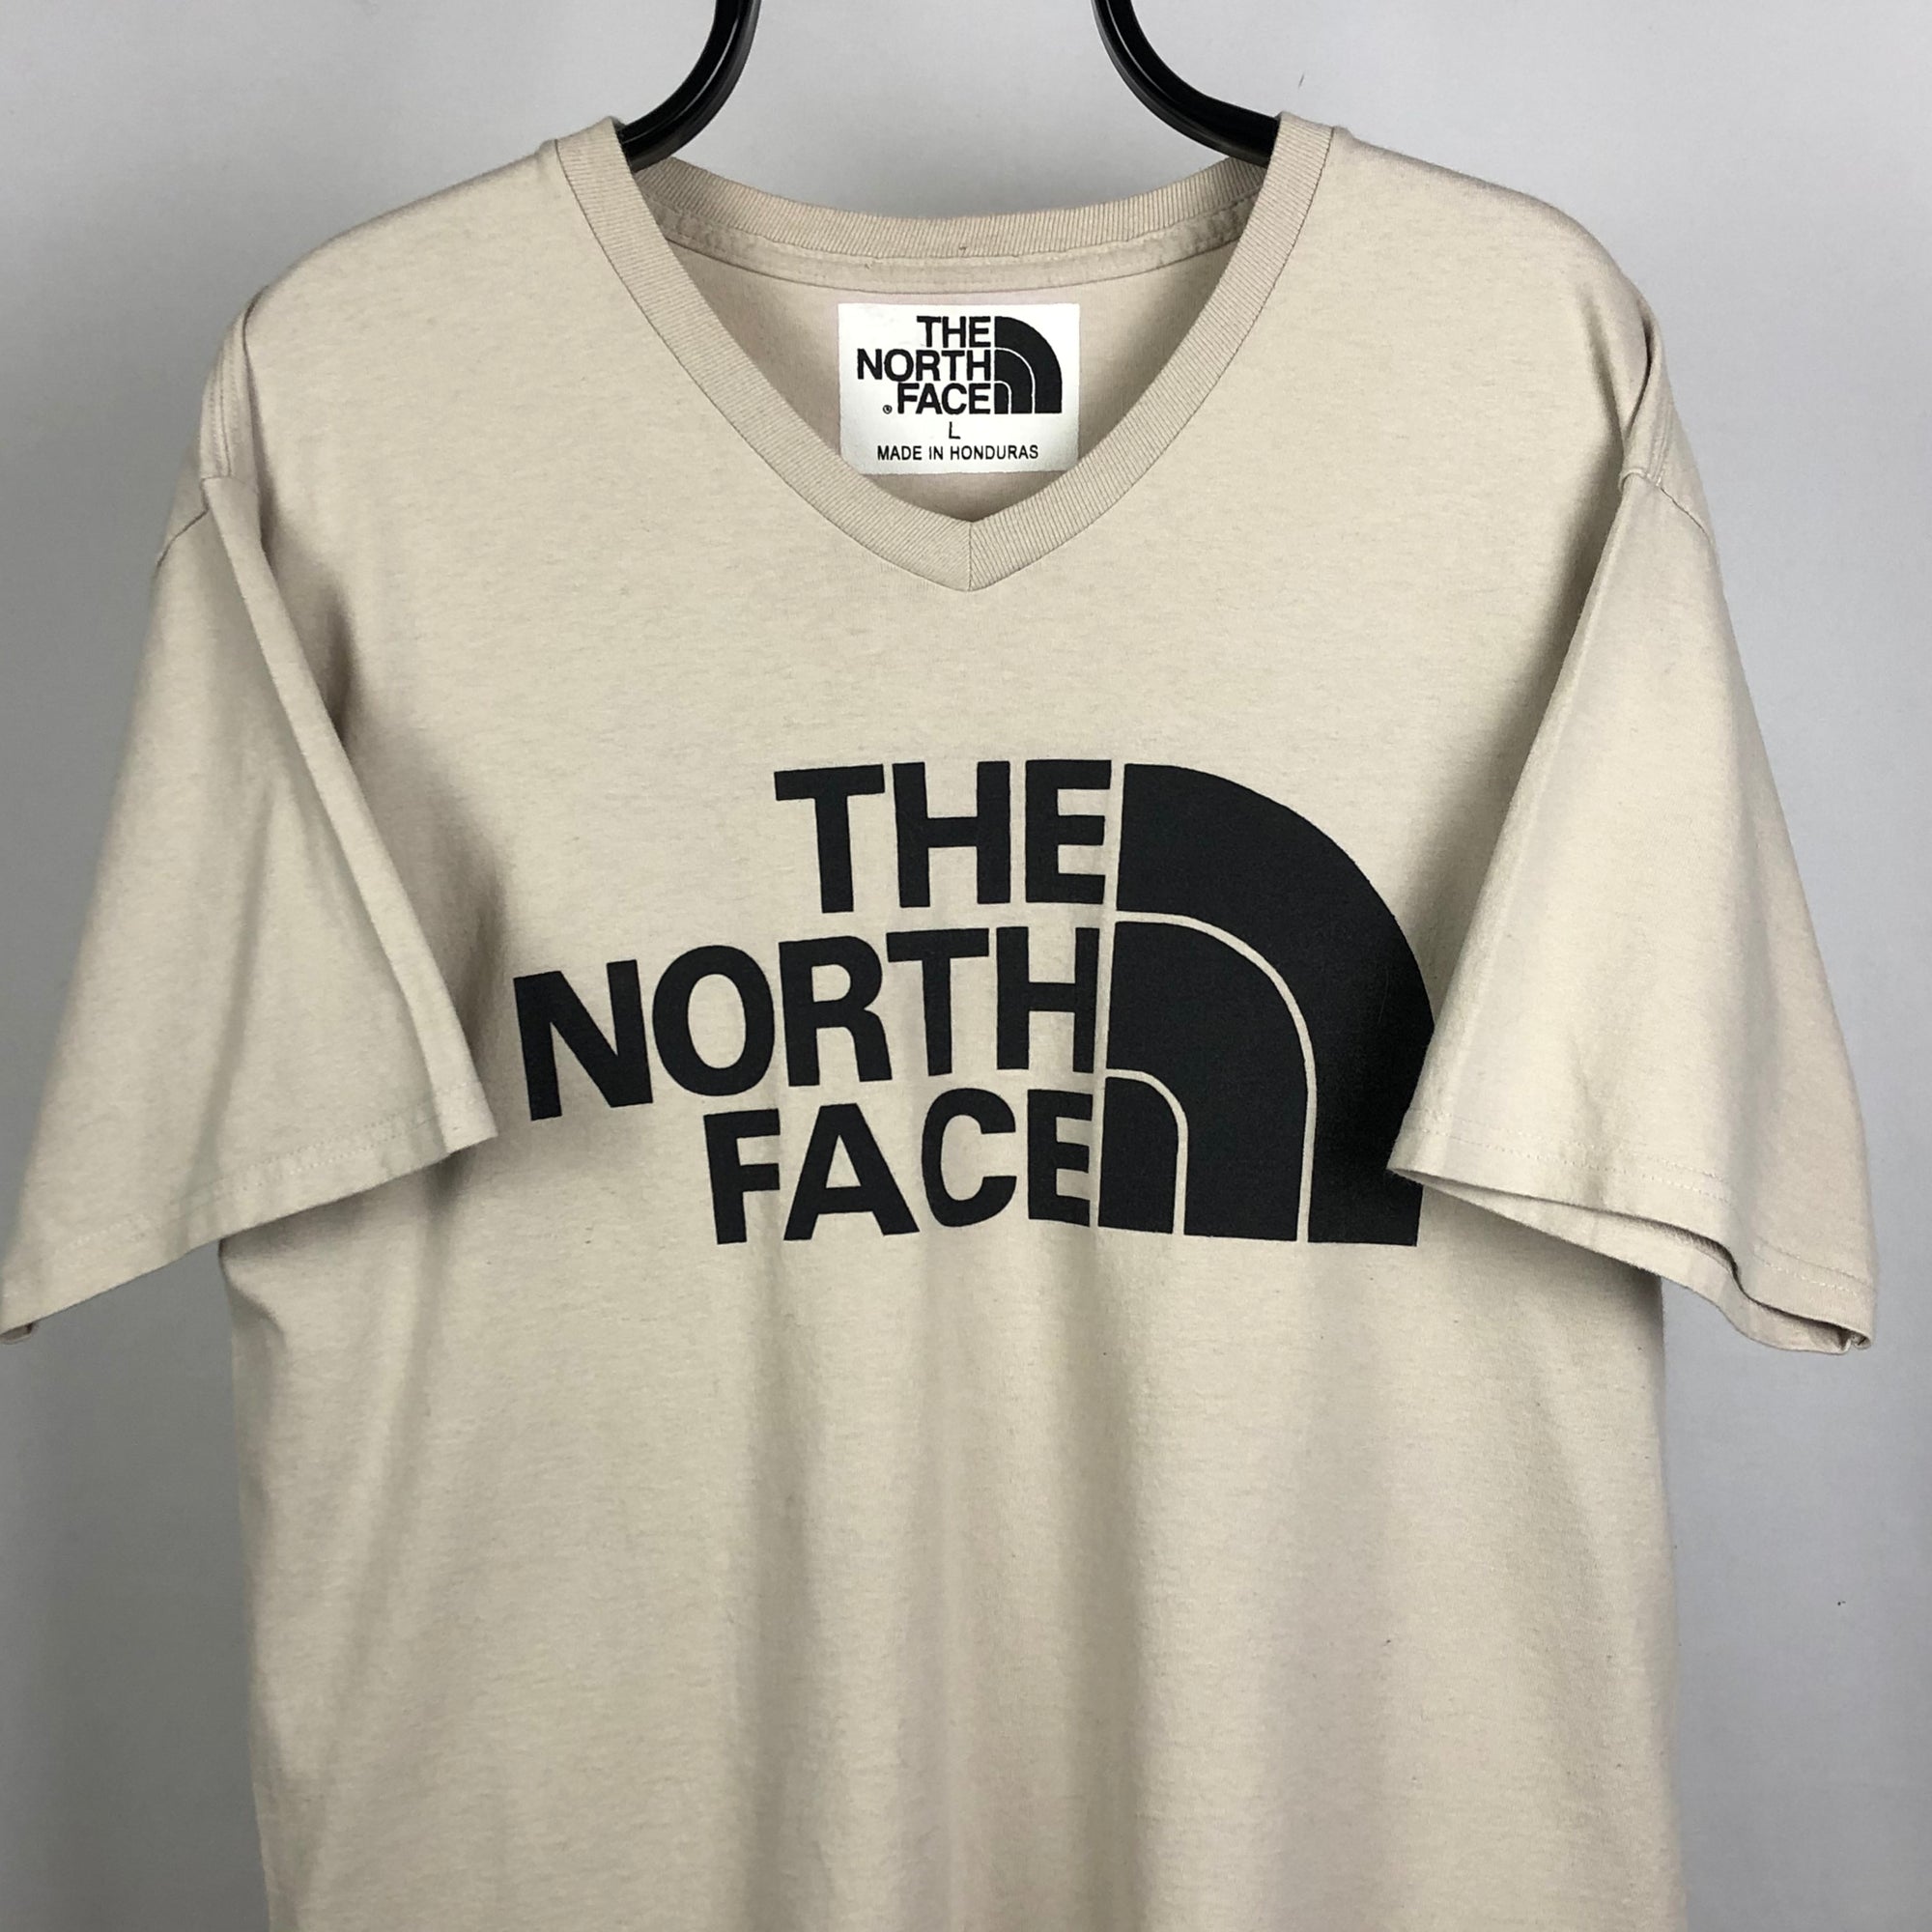 North Face Tee in Beige - Men's Large/Women's XL